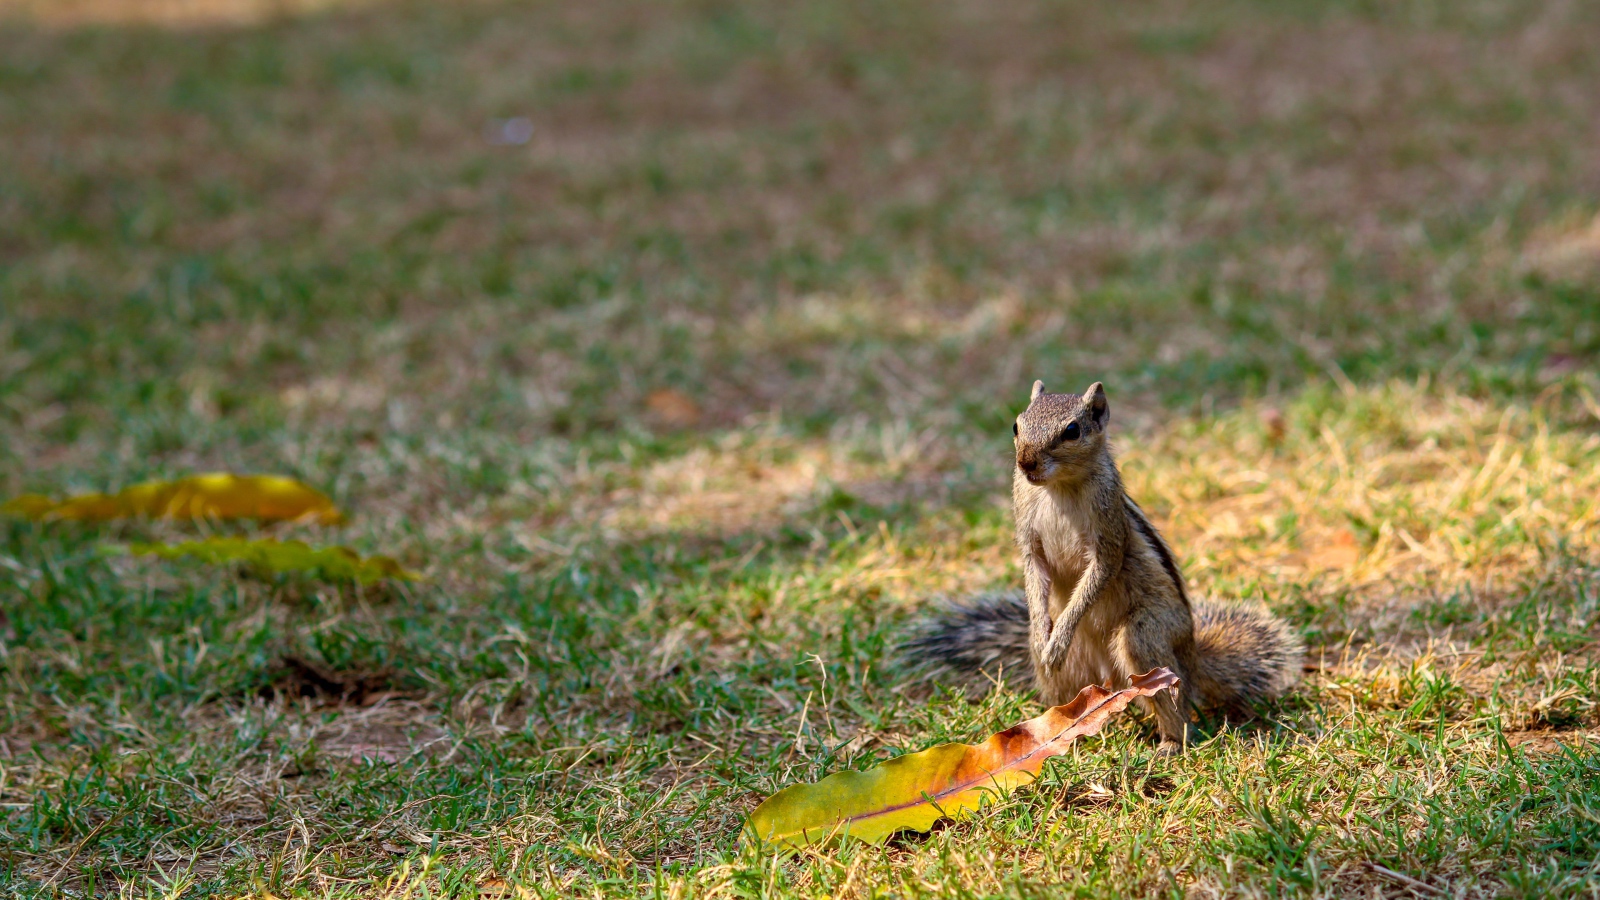 Chipmunk sitting on green grass